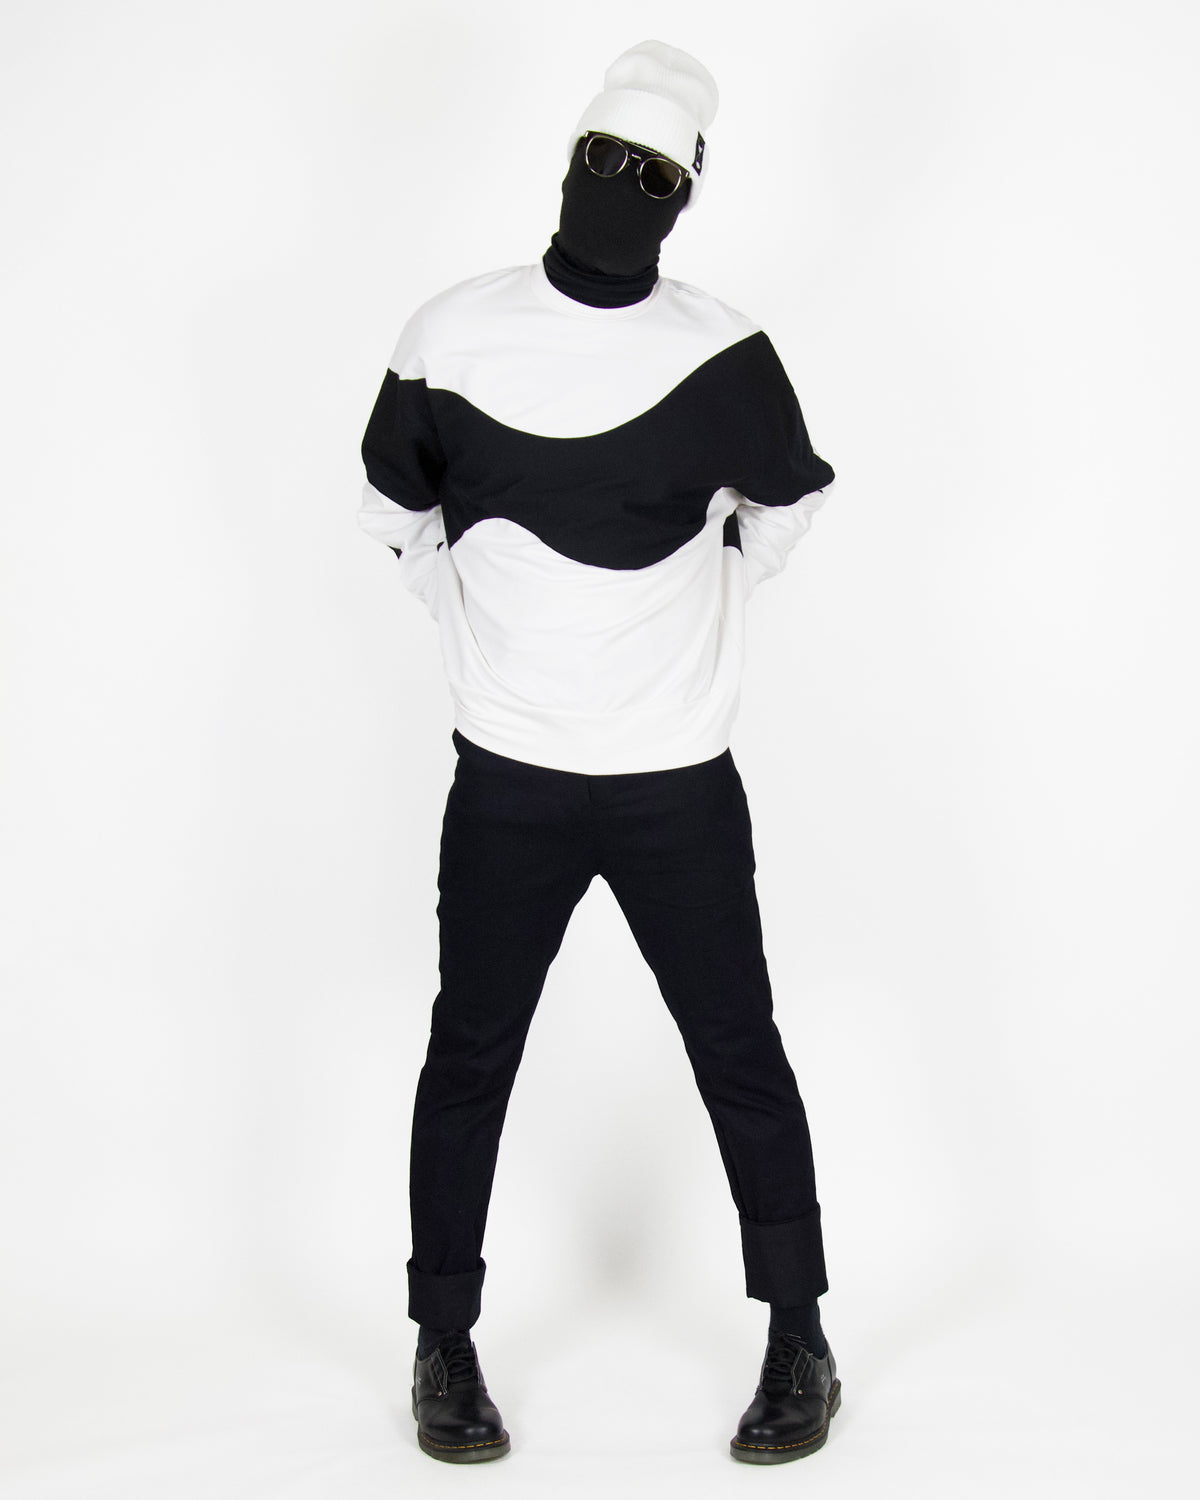 Pan Sweatshirt - White and Black